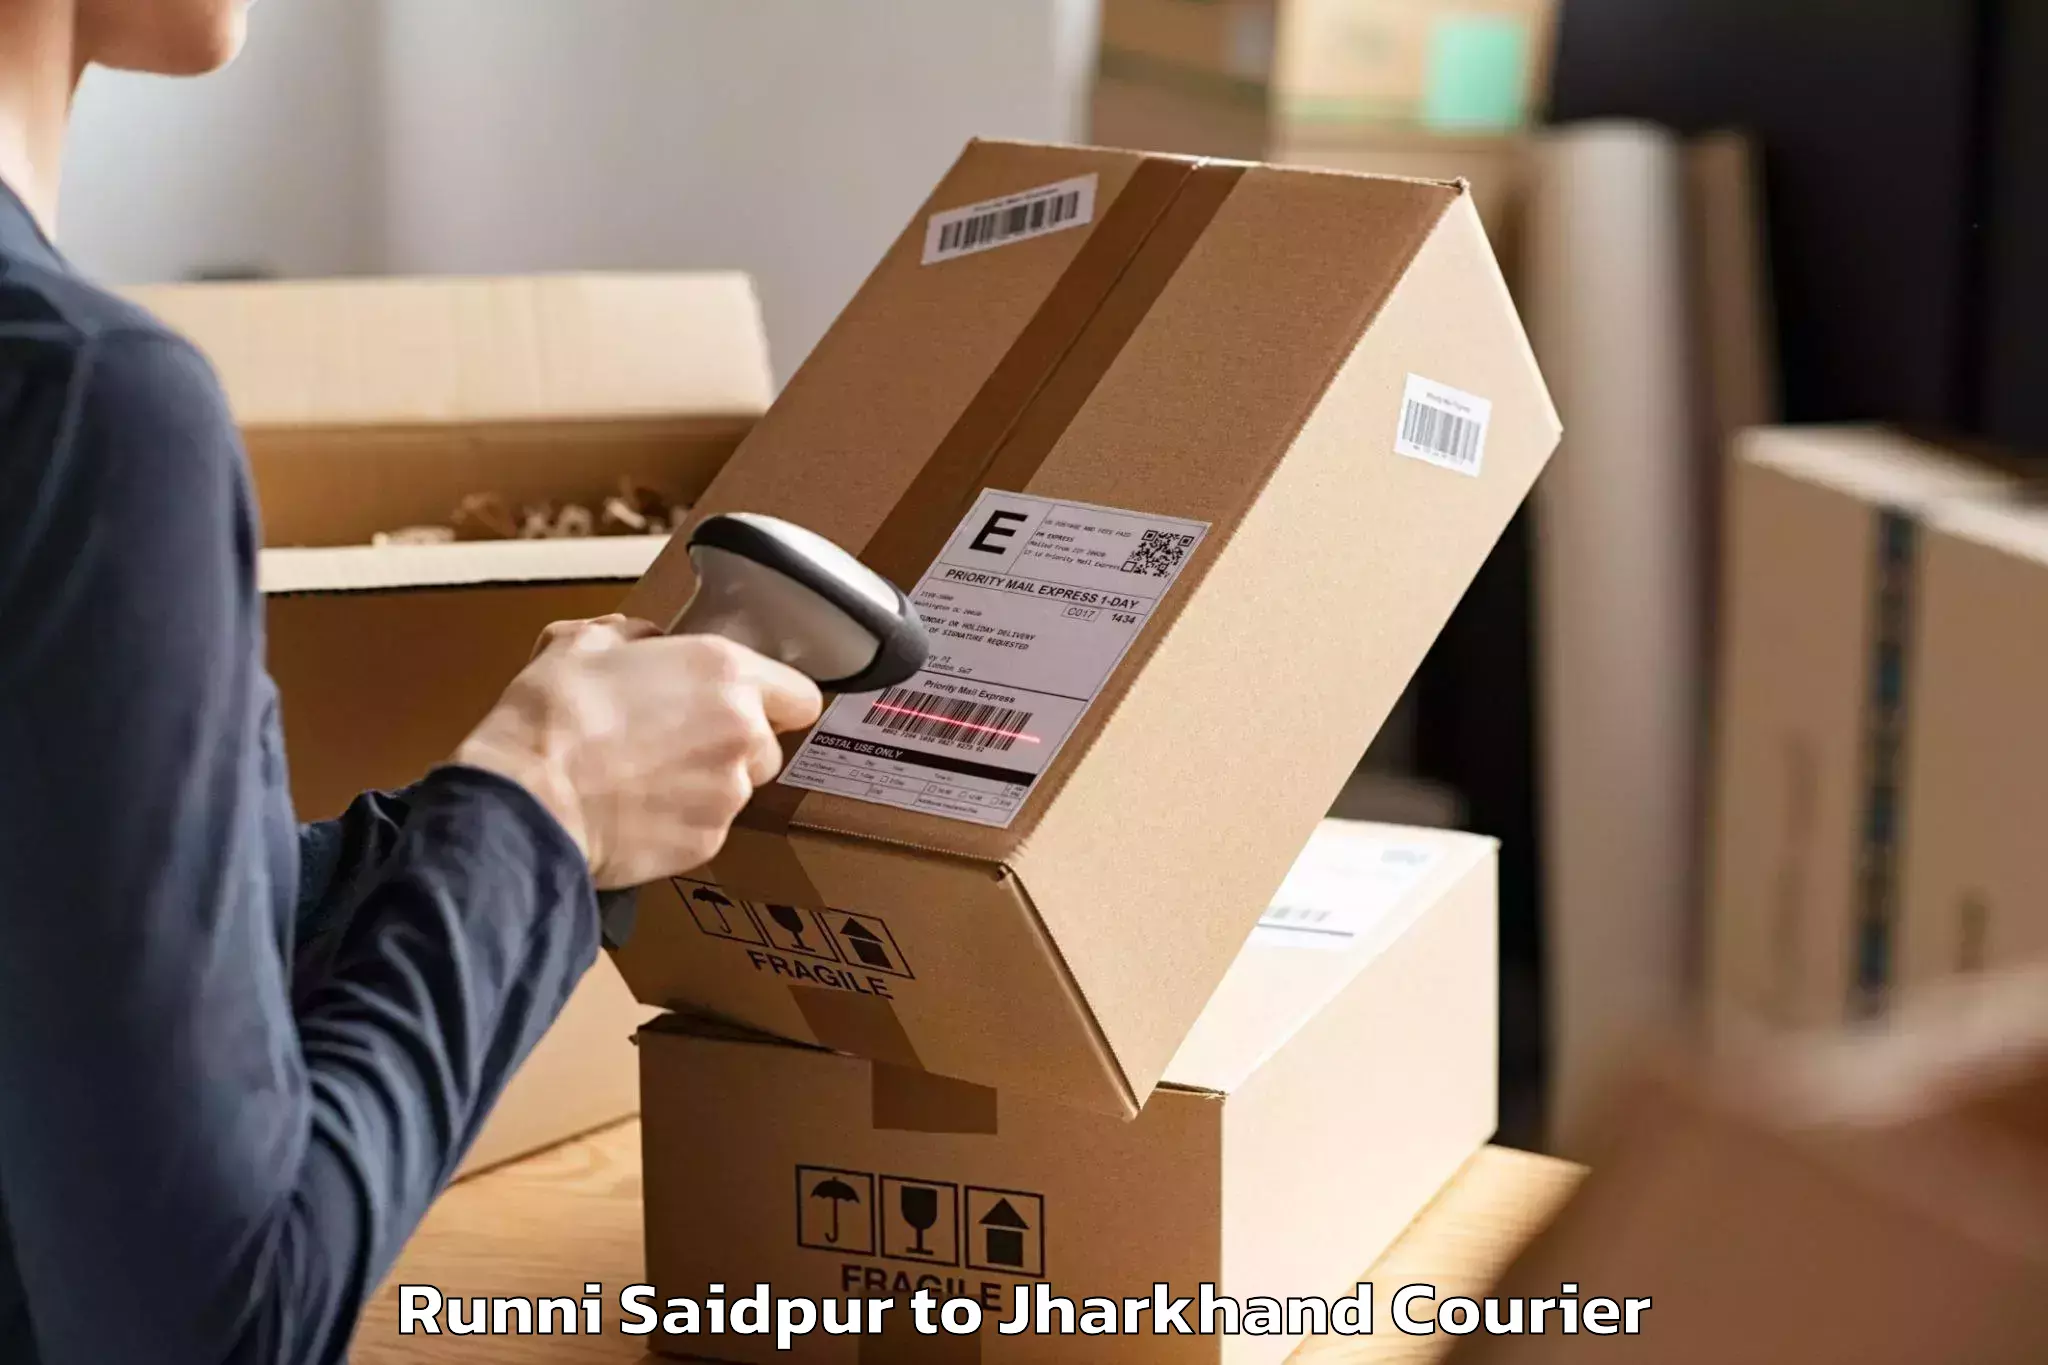 Furniture delivery service Runni Saidpur to Dhalbhumgarh